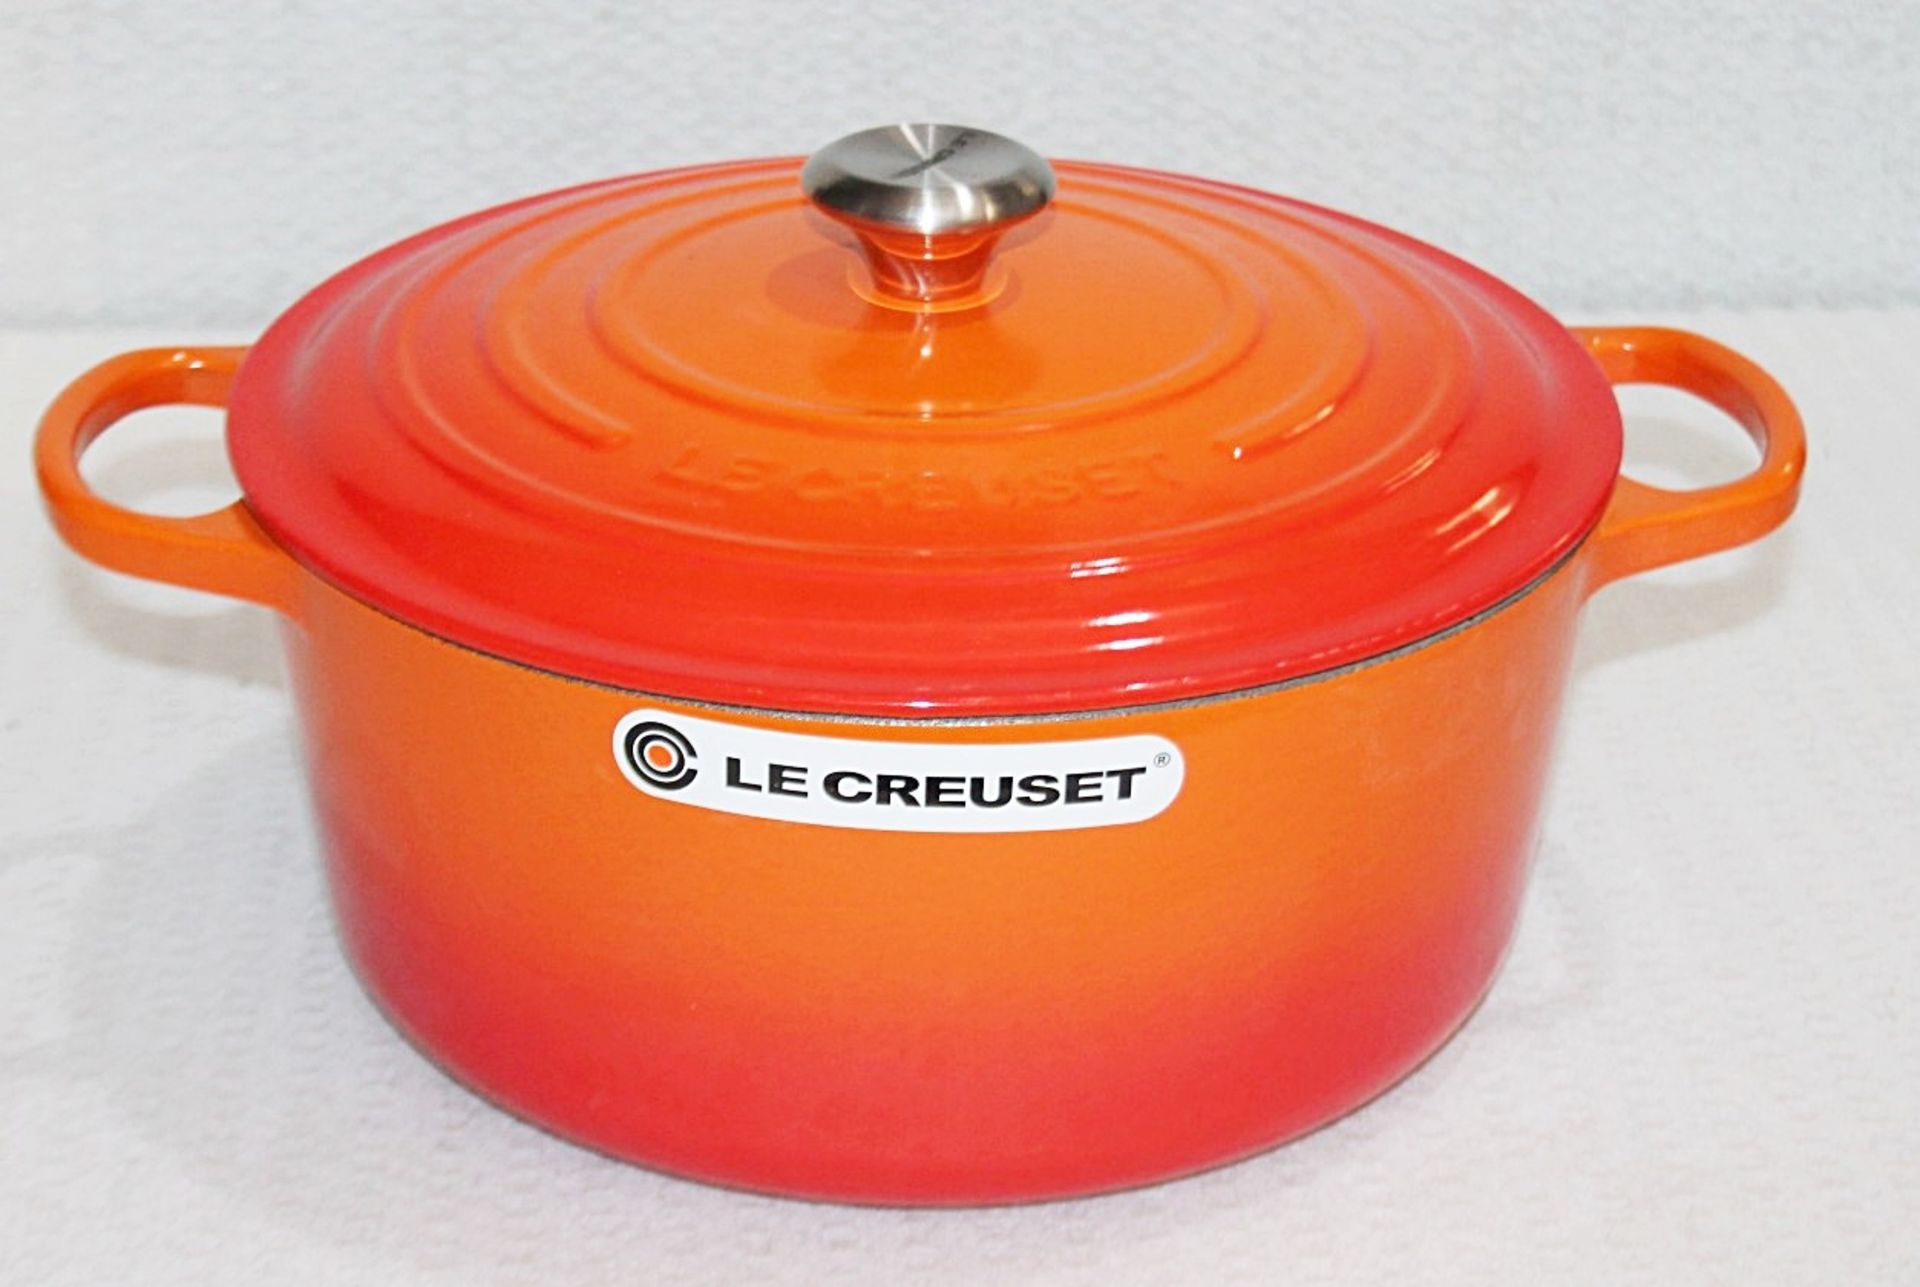 1 x LE CREUSET 'Volcanic' Enamelled Cast Iron Round Casserole Dish With Lid (30cm / 8.1-Litre) - - Image 7 of 13